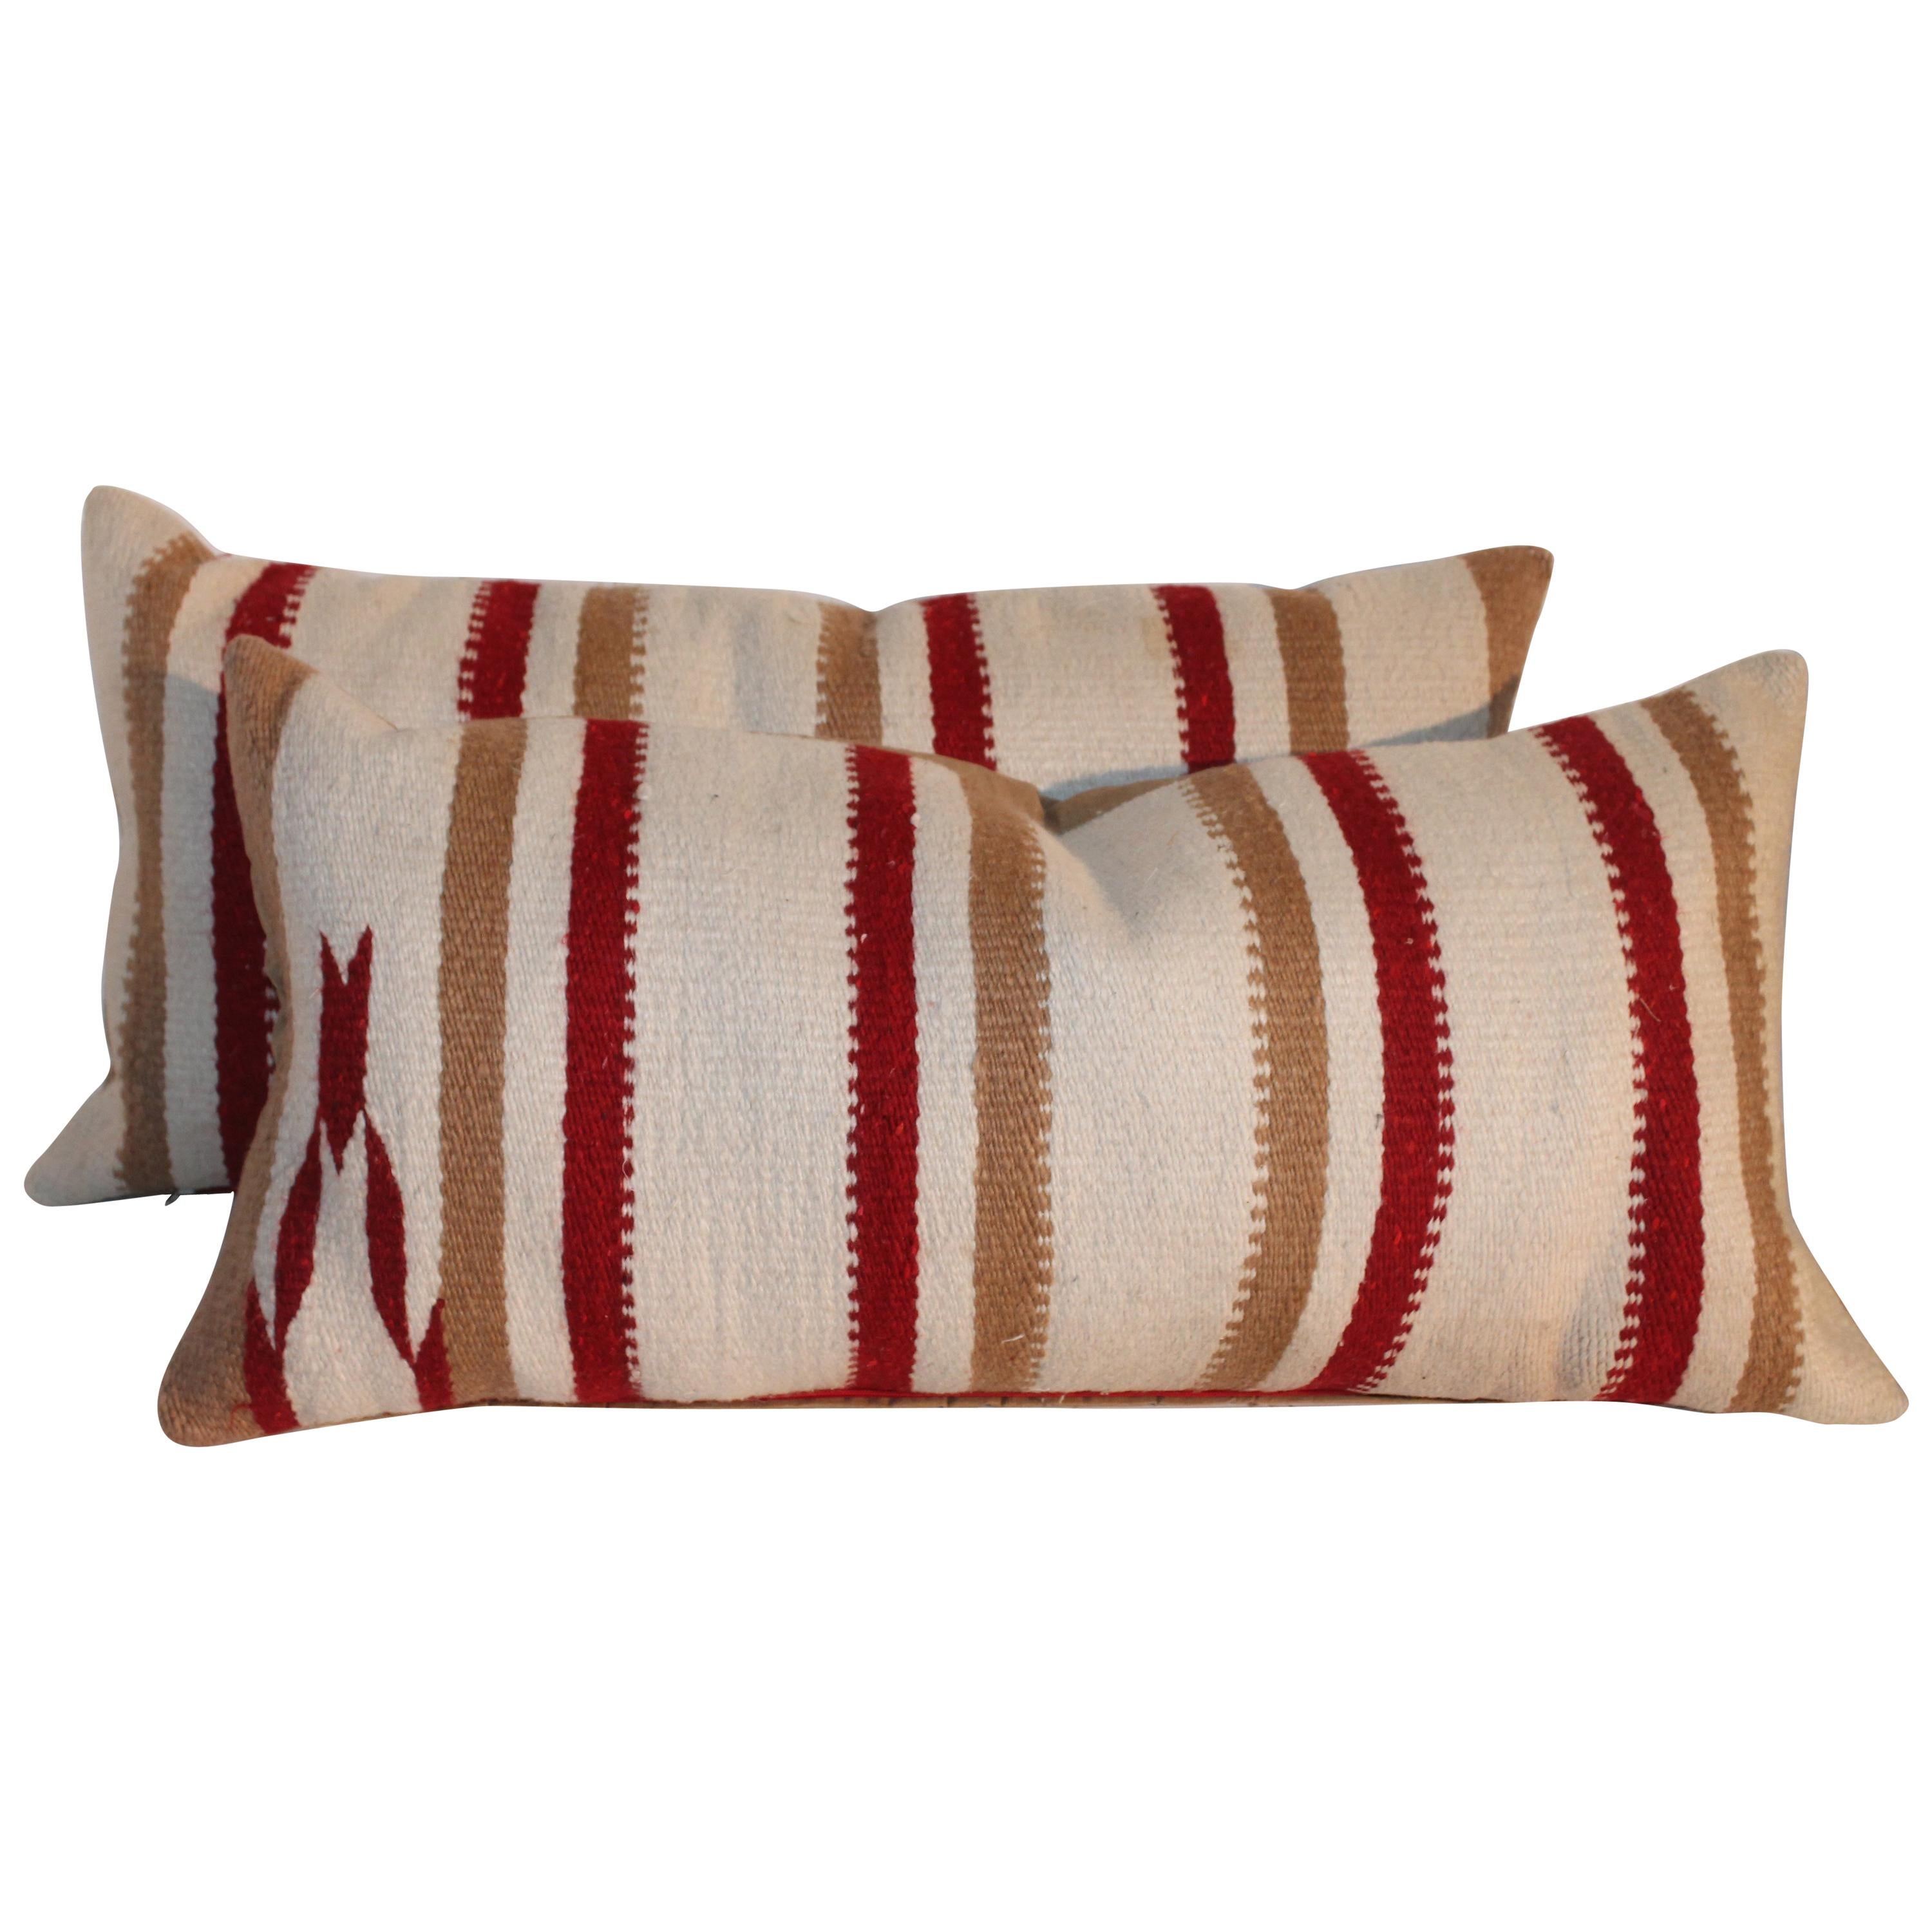 Navajo Saddle Blanket Pillows, Pair